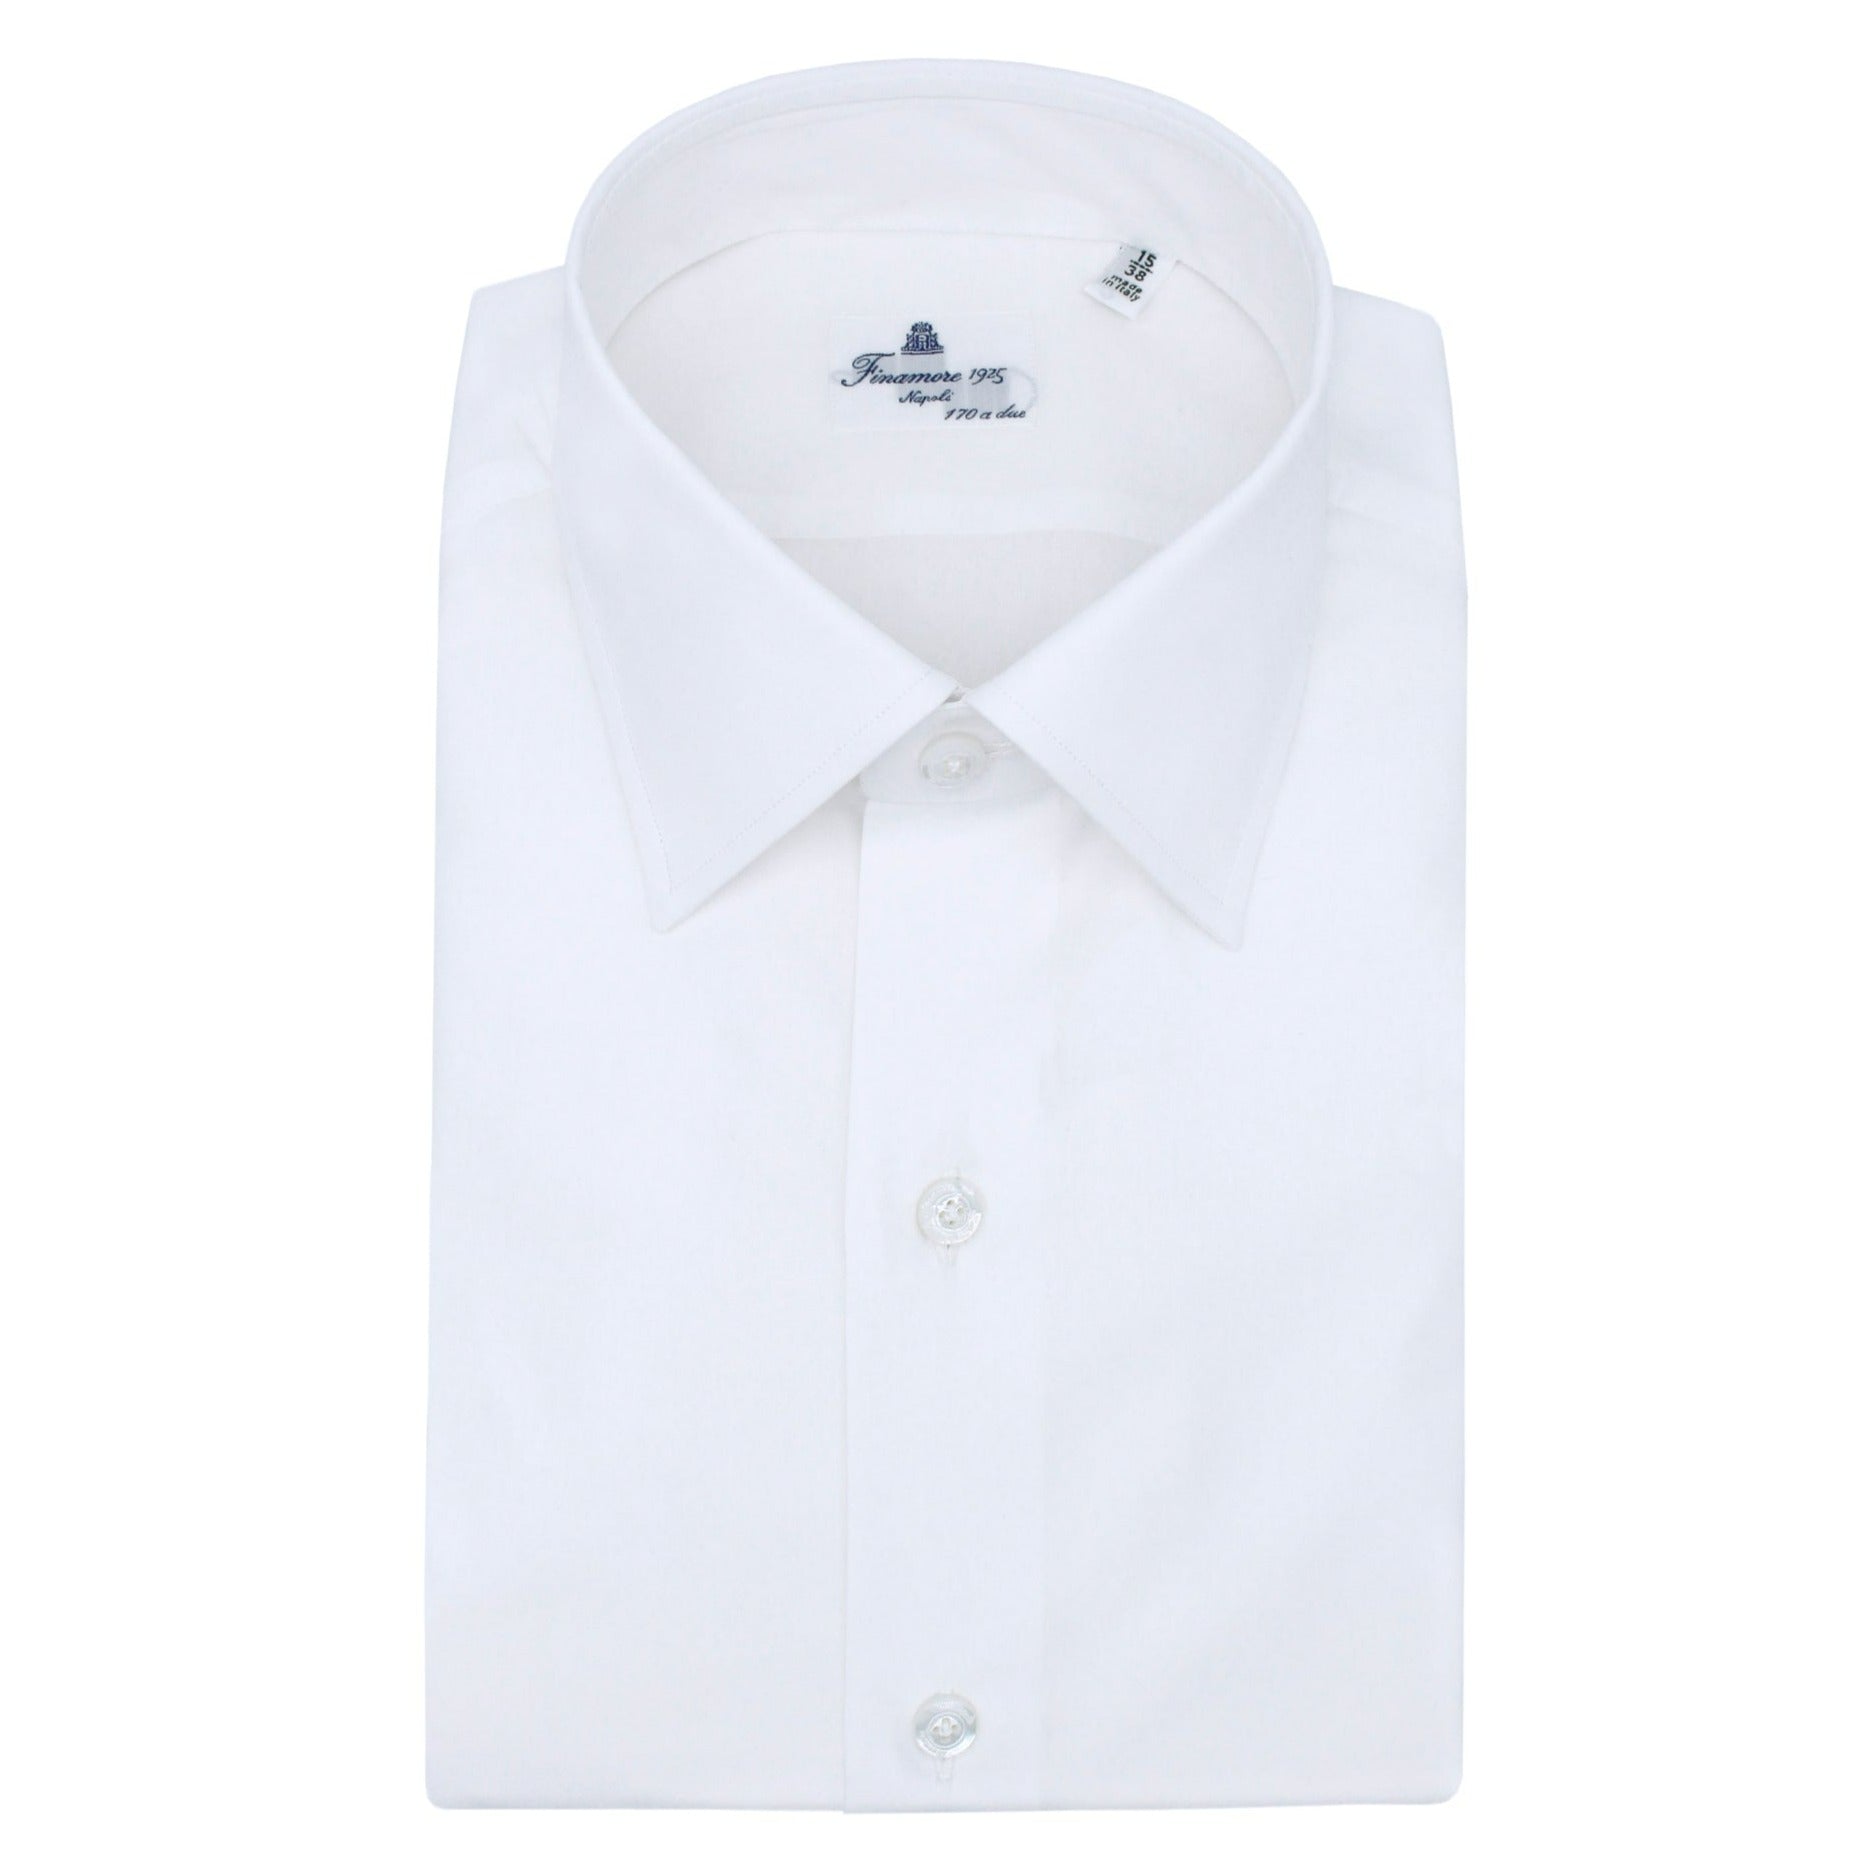 Classic 170 a due cotton Giza 45 white shirt